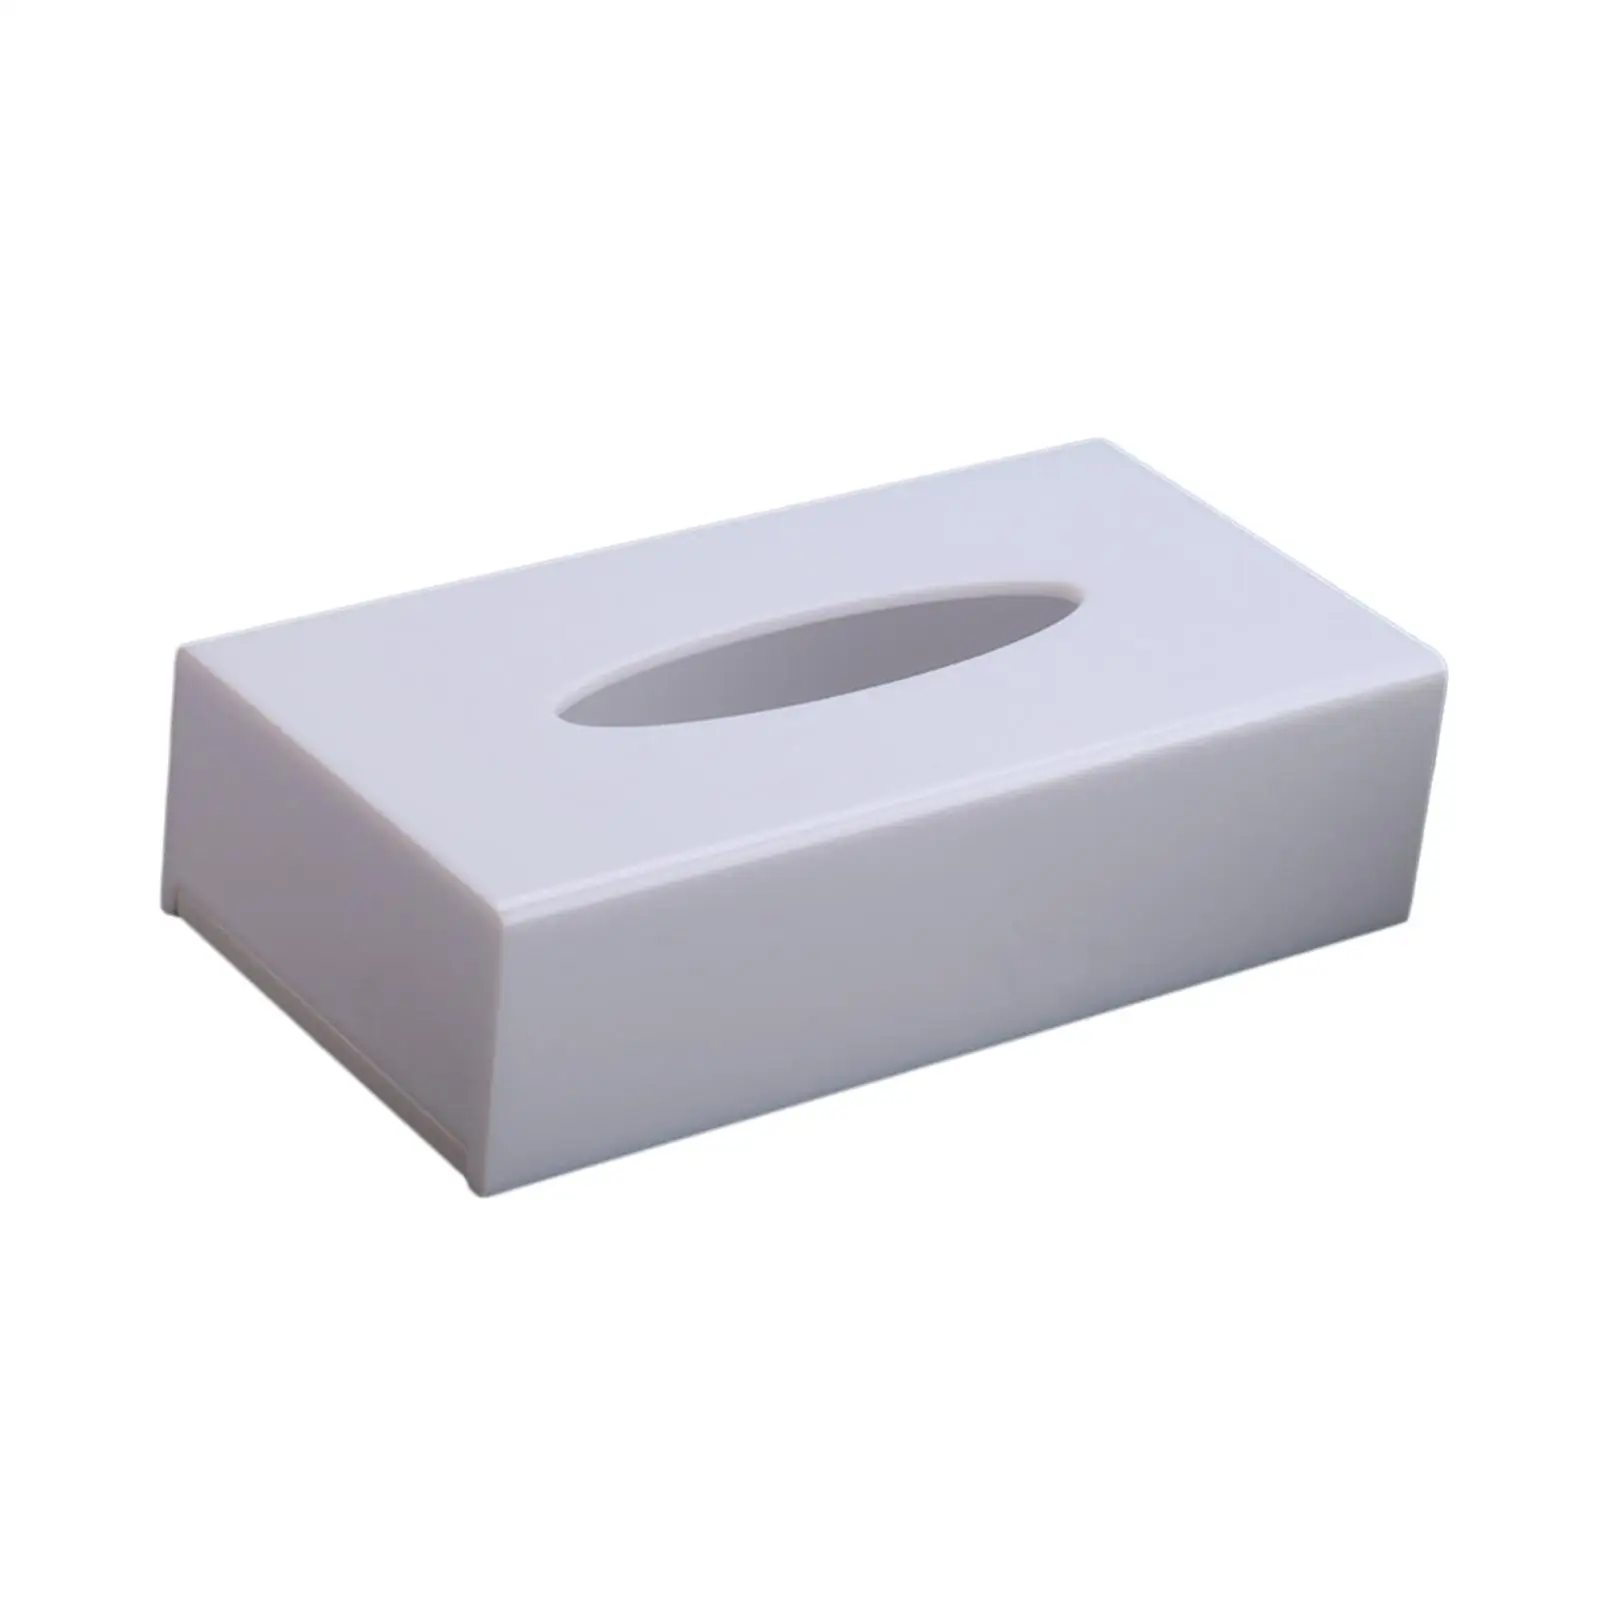 Tissue Box Holder Acrylic Toilet Paper Storage Rack Bathroom Toilet Paper Holder for Kitchen Bathroom Desktop Office Cars